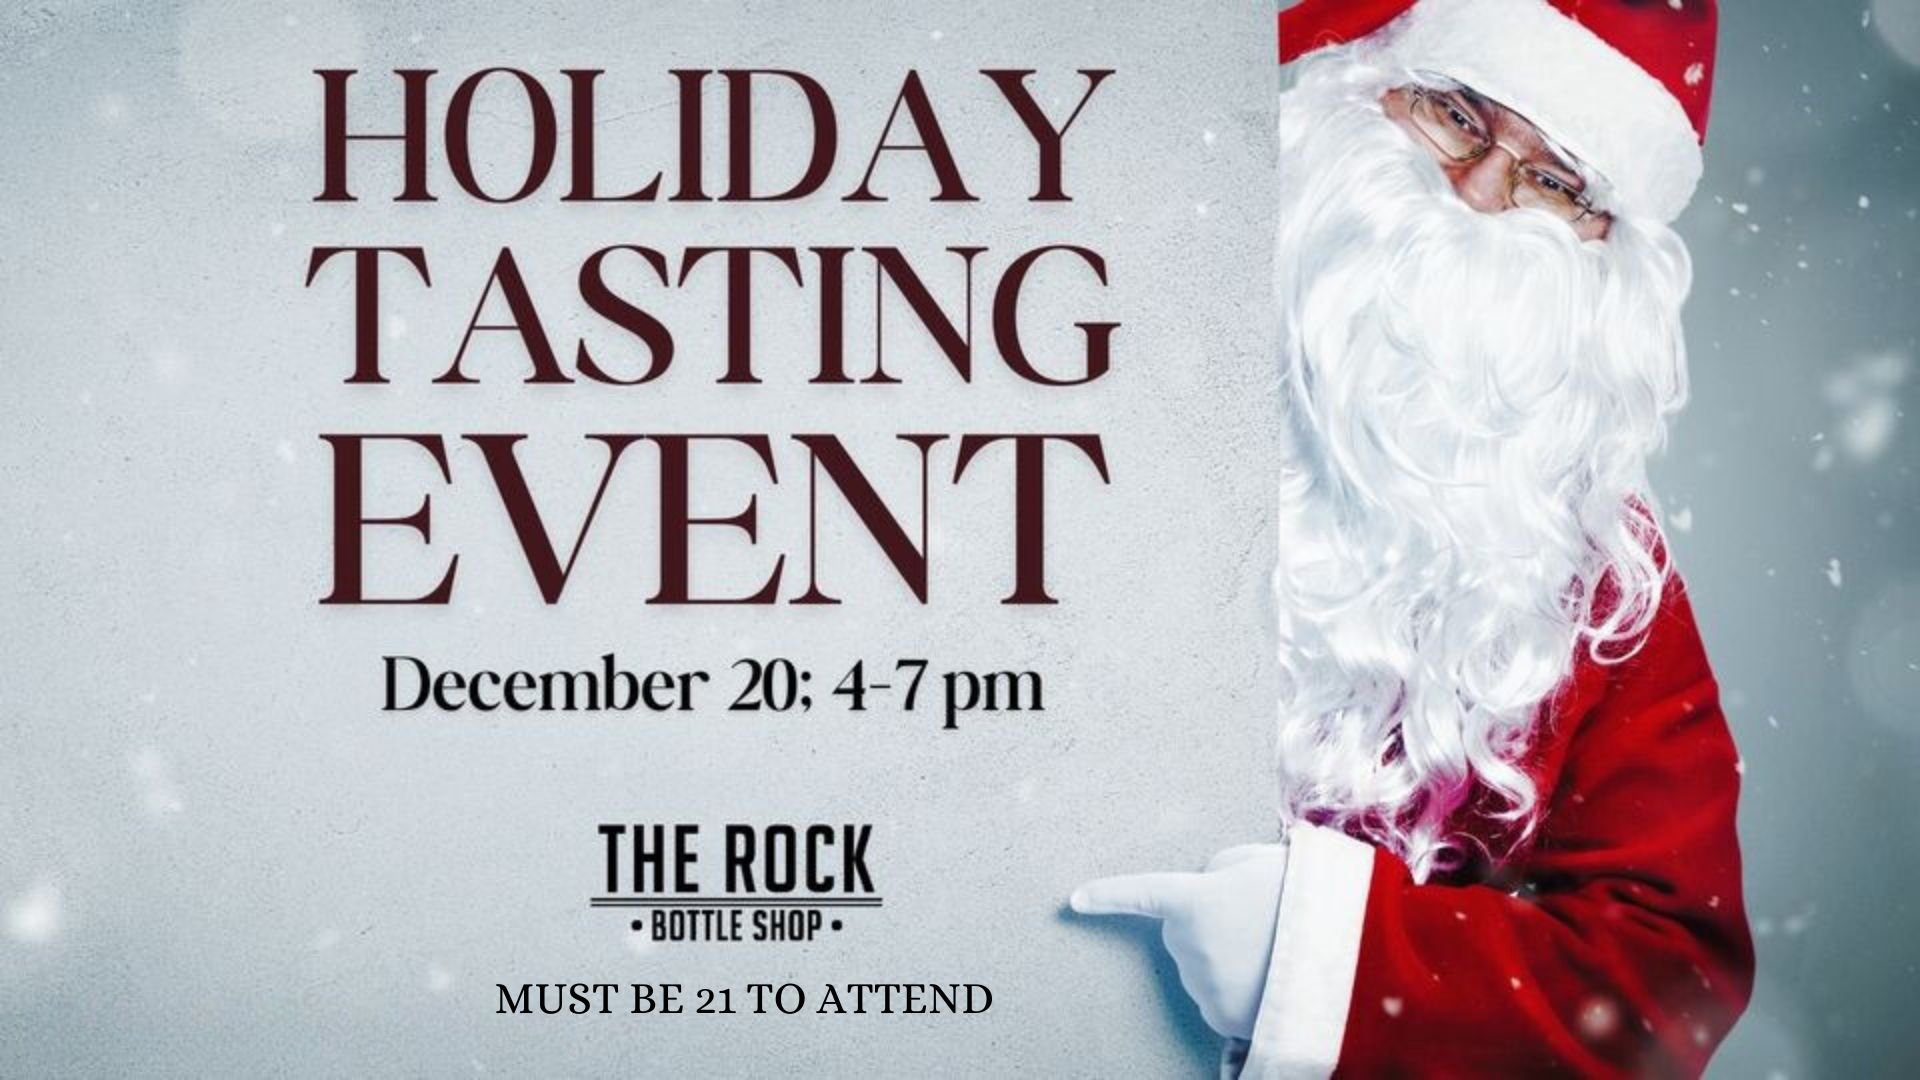 The Rock Bottle Shop Holiday Tasting Event